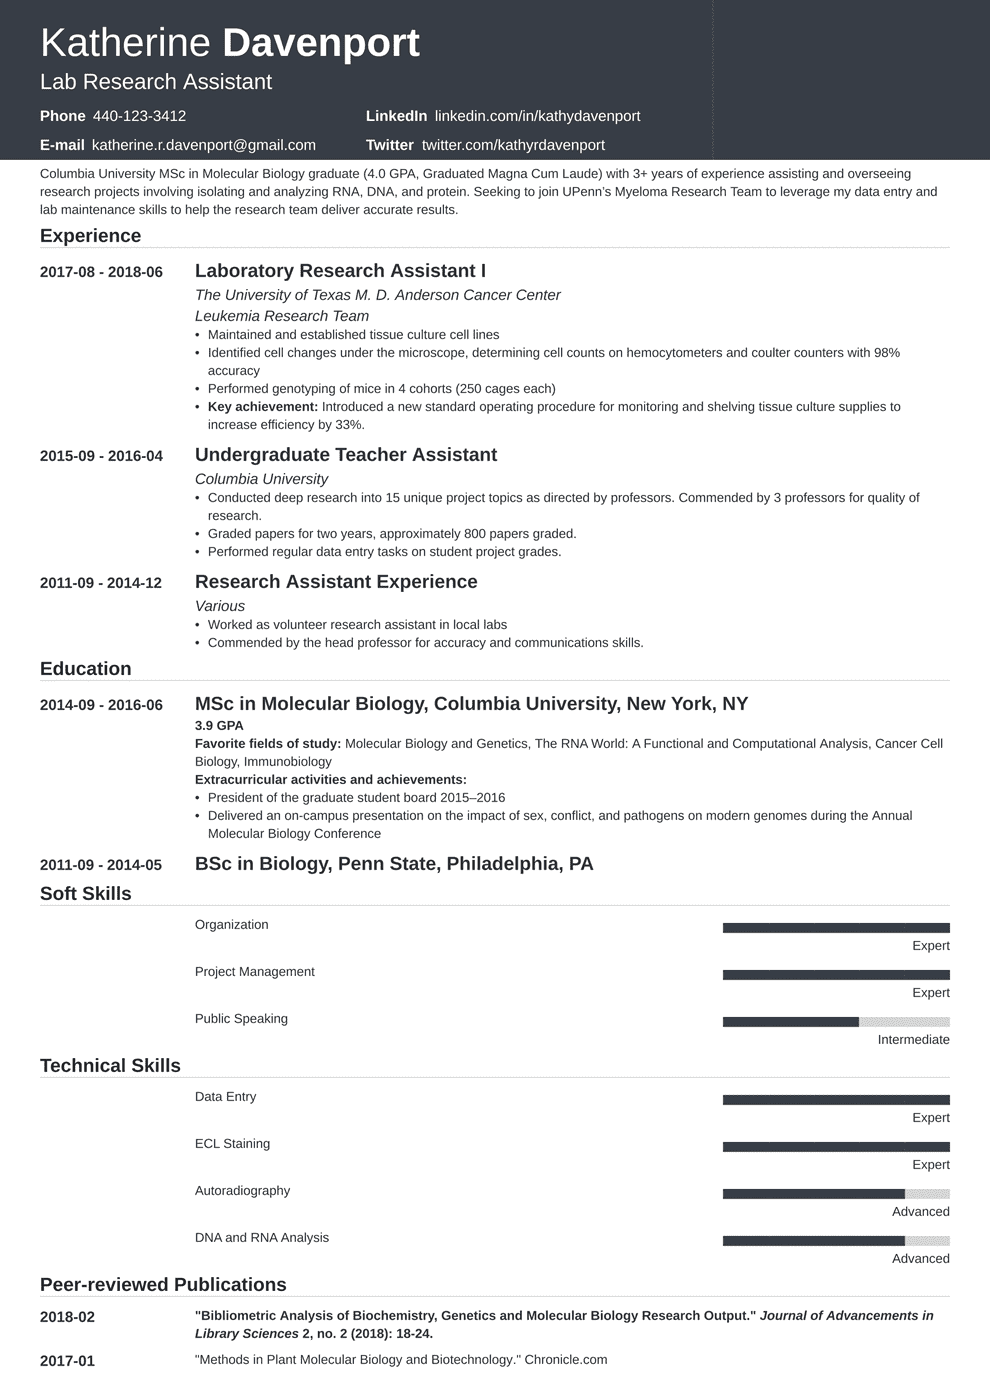 Research Assistant Resume: Sample Job Description & Skills